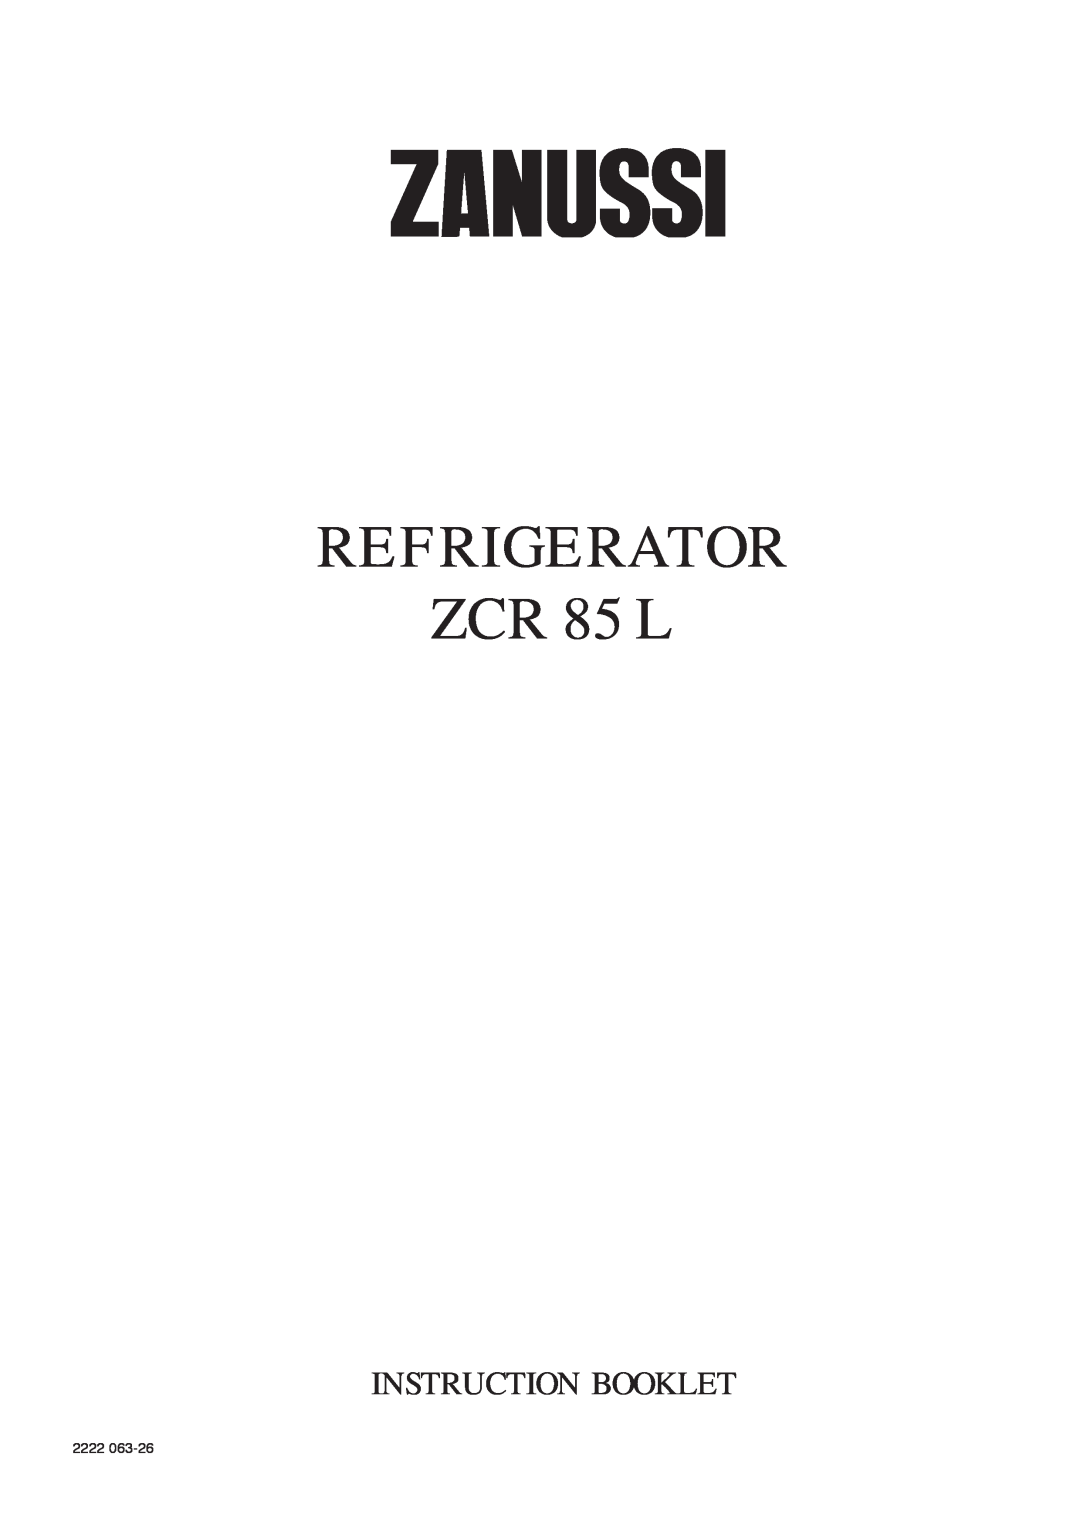 Zanussi manual REFRIGERATOR ZCR 85 L, Instruction Booklet, 2222 